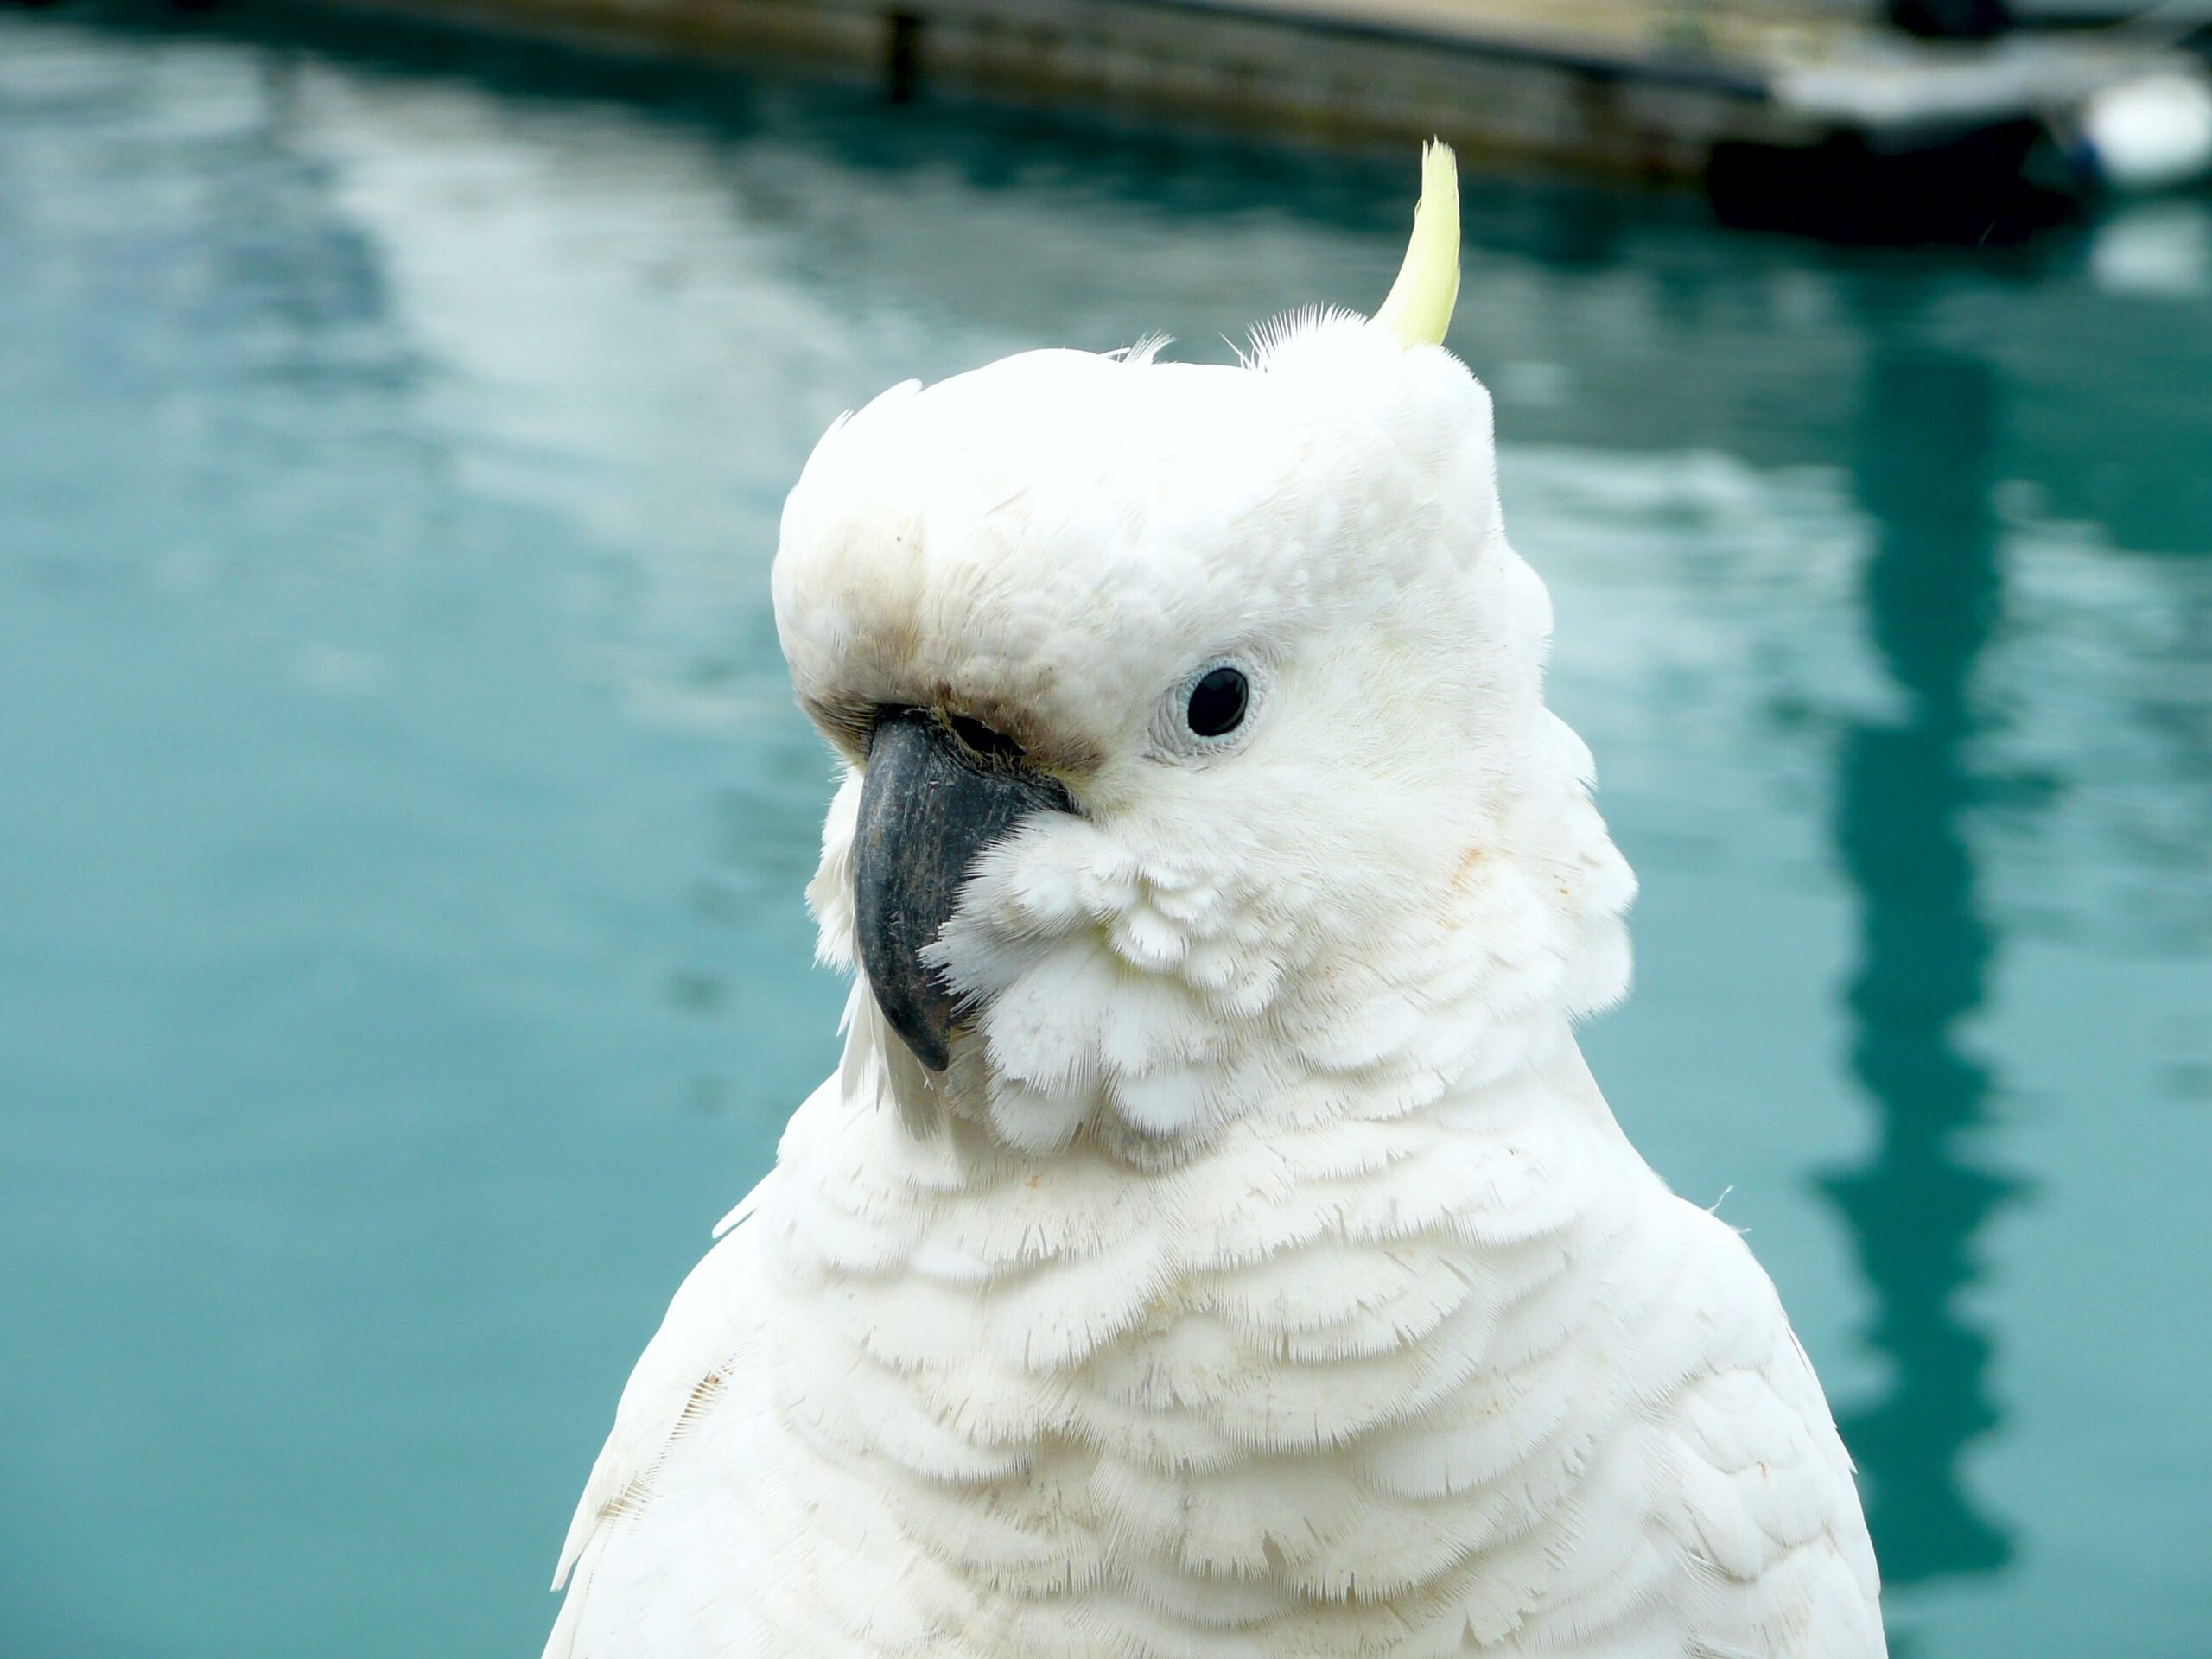 Australie-Whitsundays-hamilton island-papegaai-witte vogel-natuur